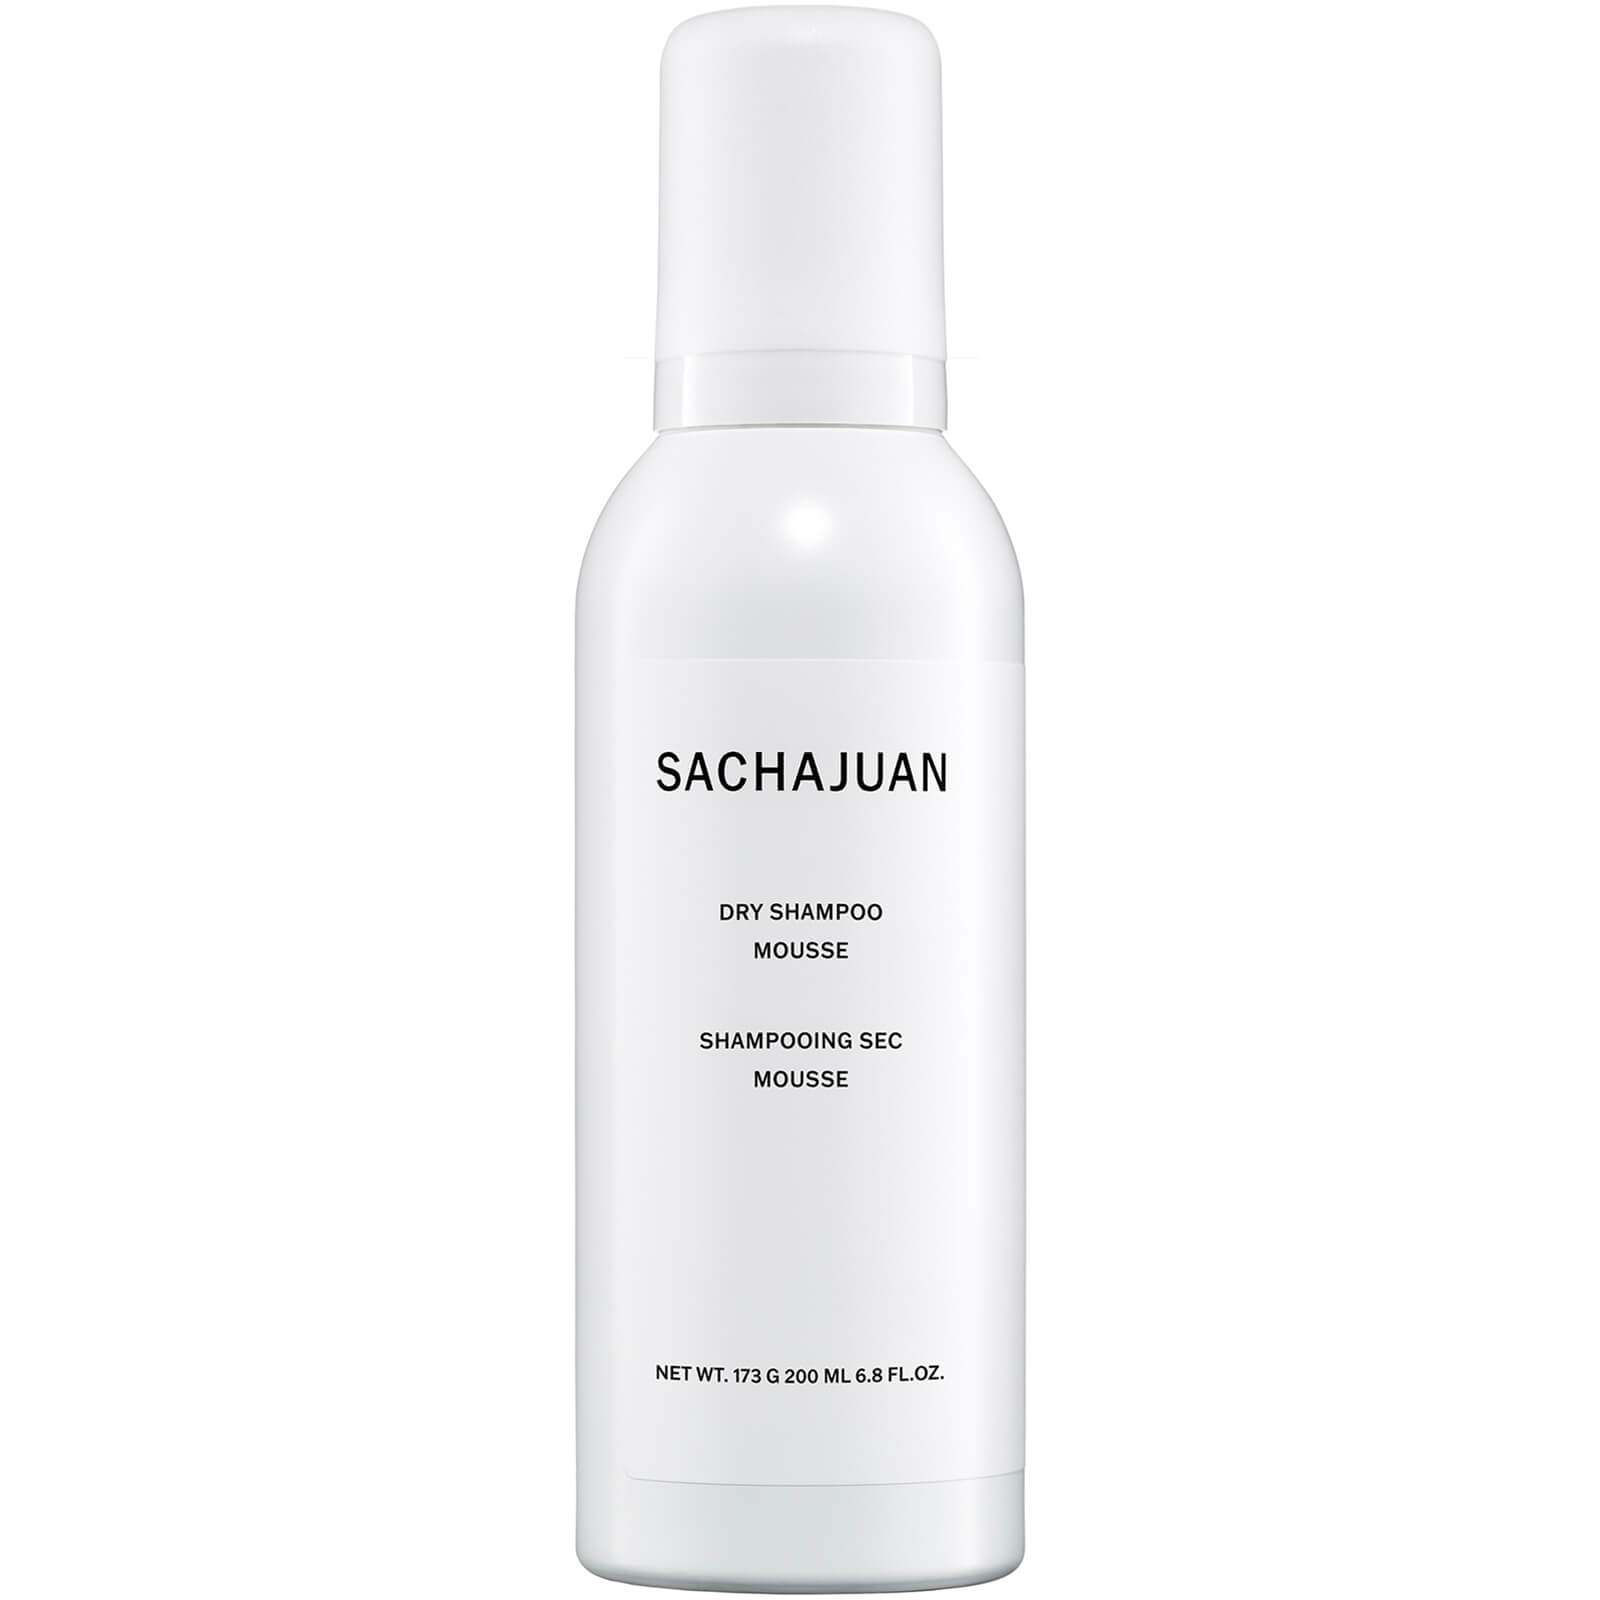 Sachajuan Dry Shampoo Mousse 200ml von Sachajuan